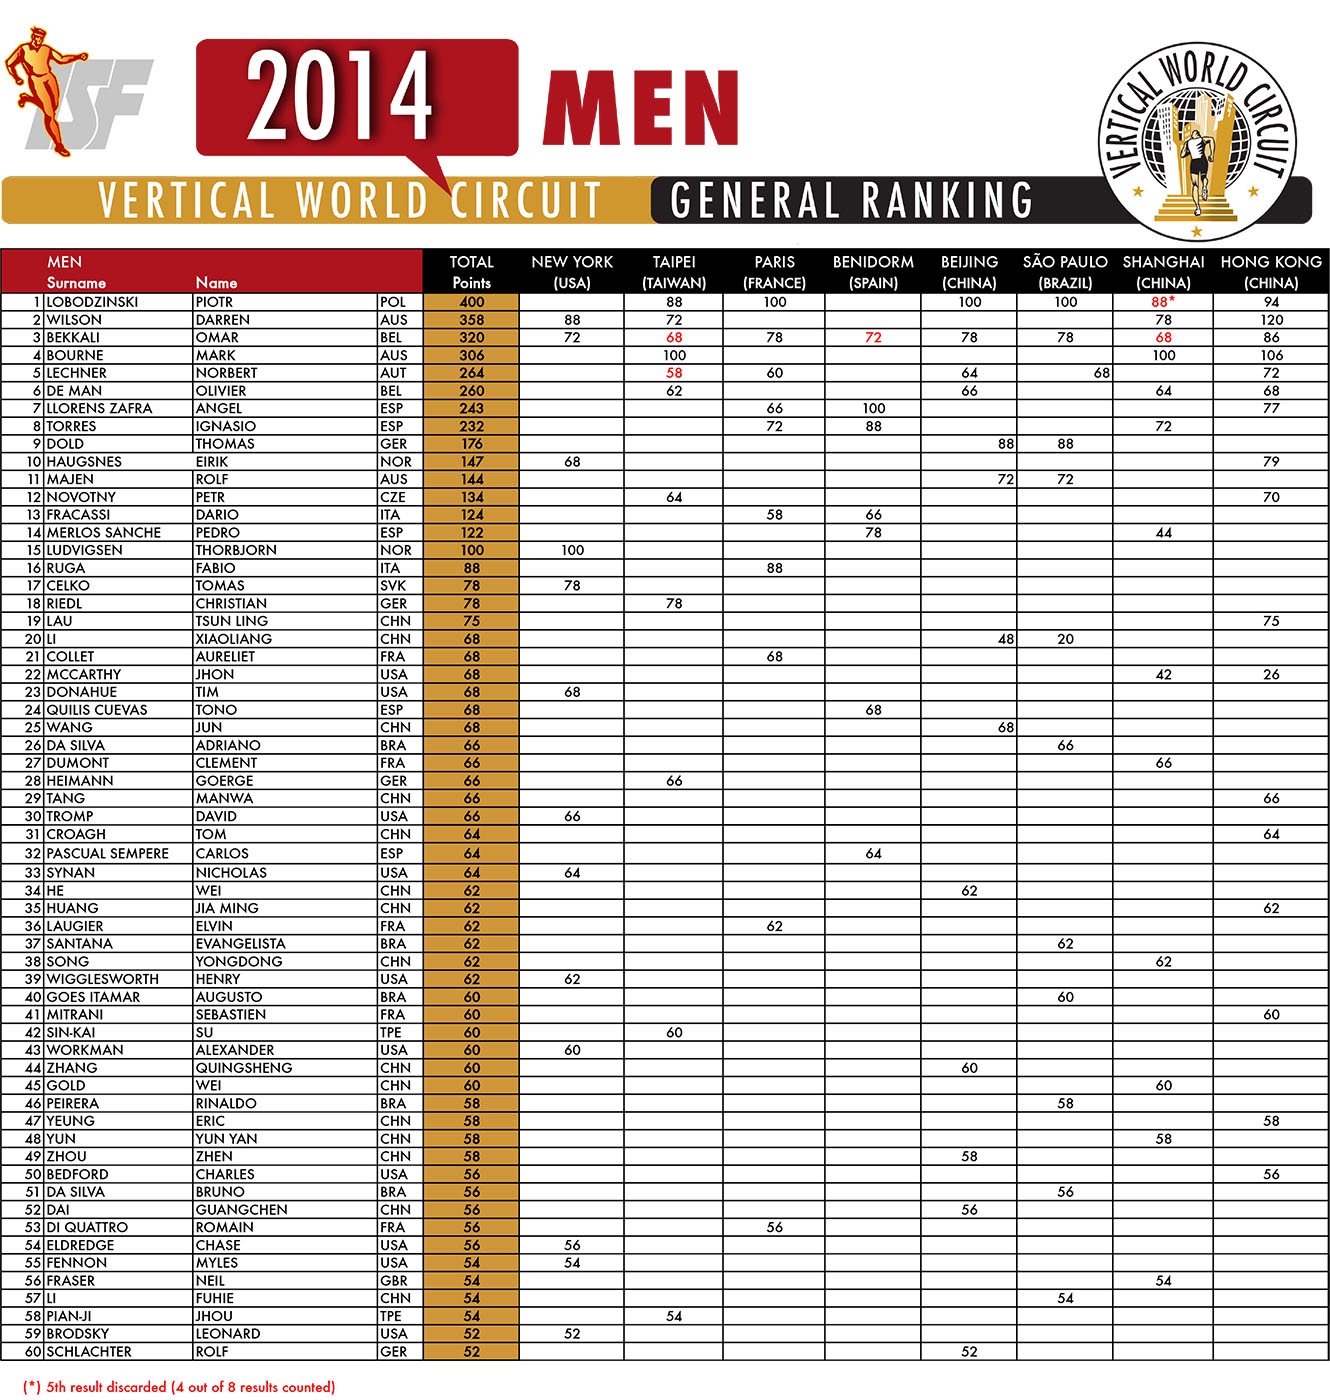 2014-ranking-men-women-DICEMBRE.xls